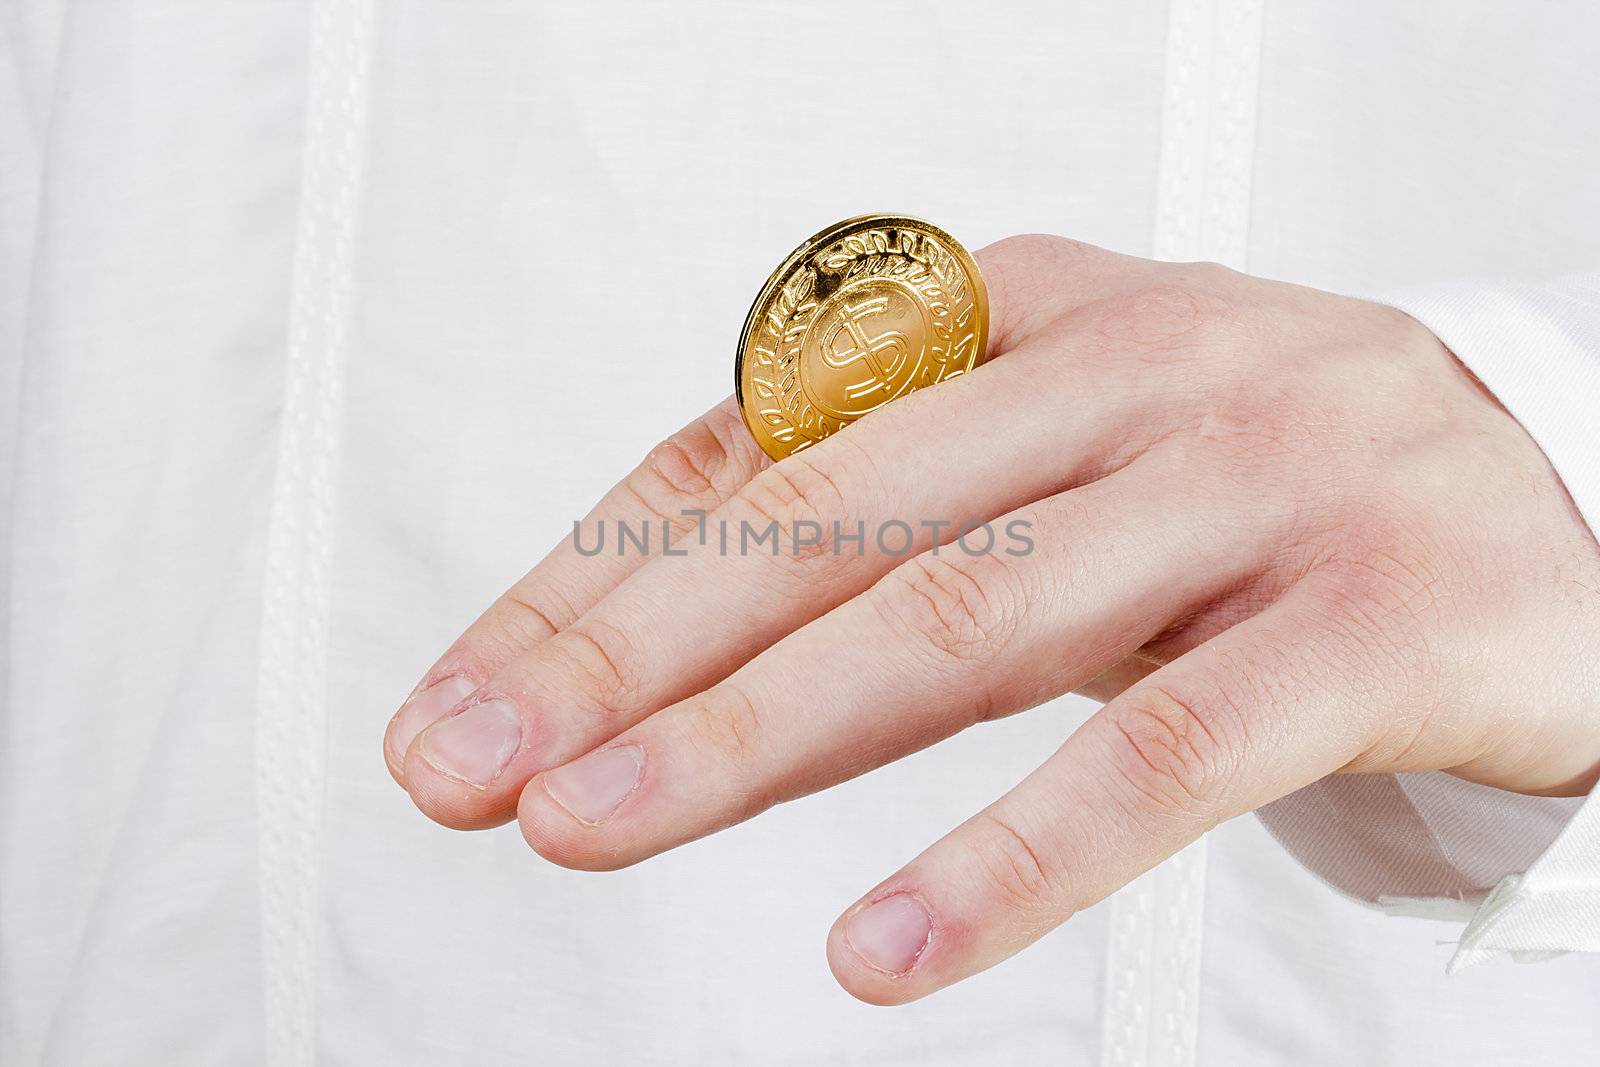 Close-up photograph of a golden coin between a man's fingers.